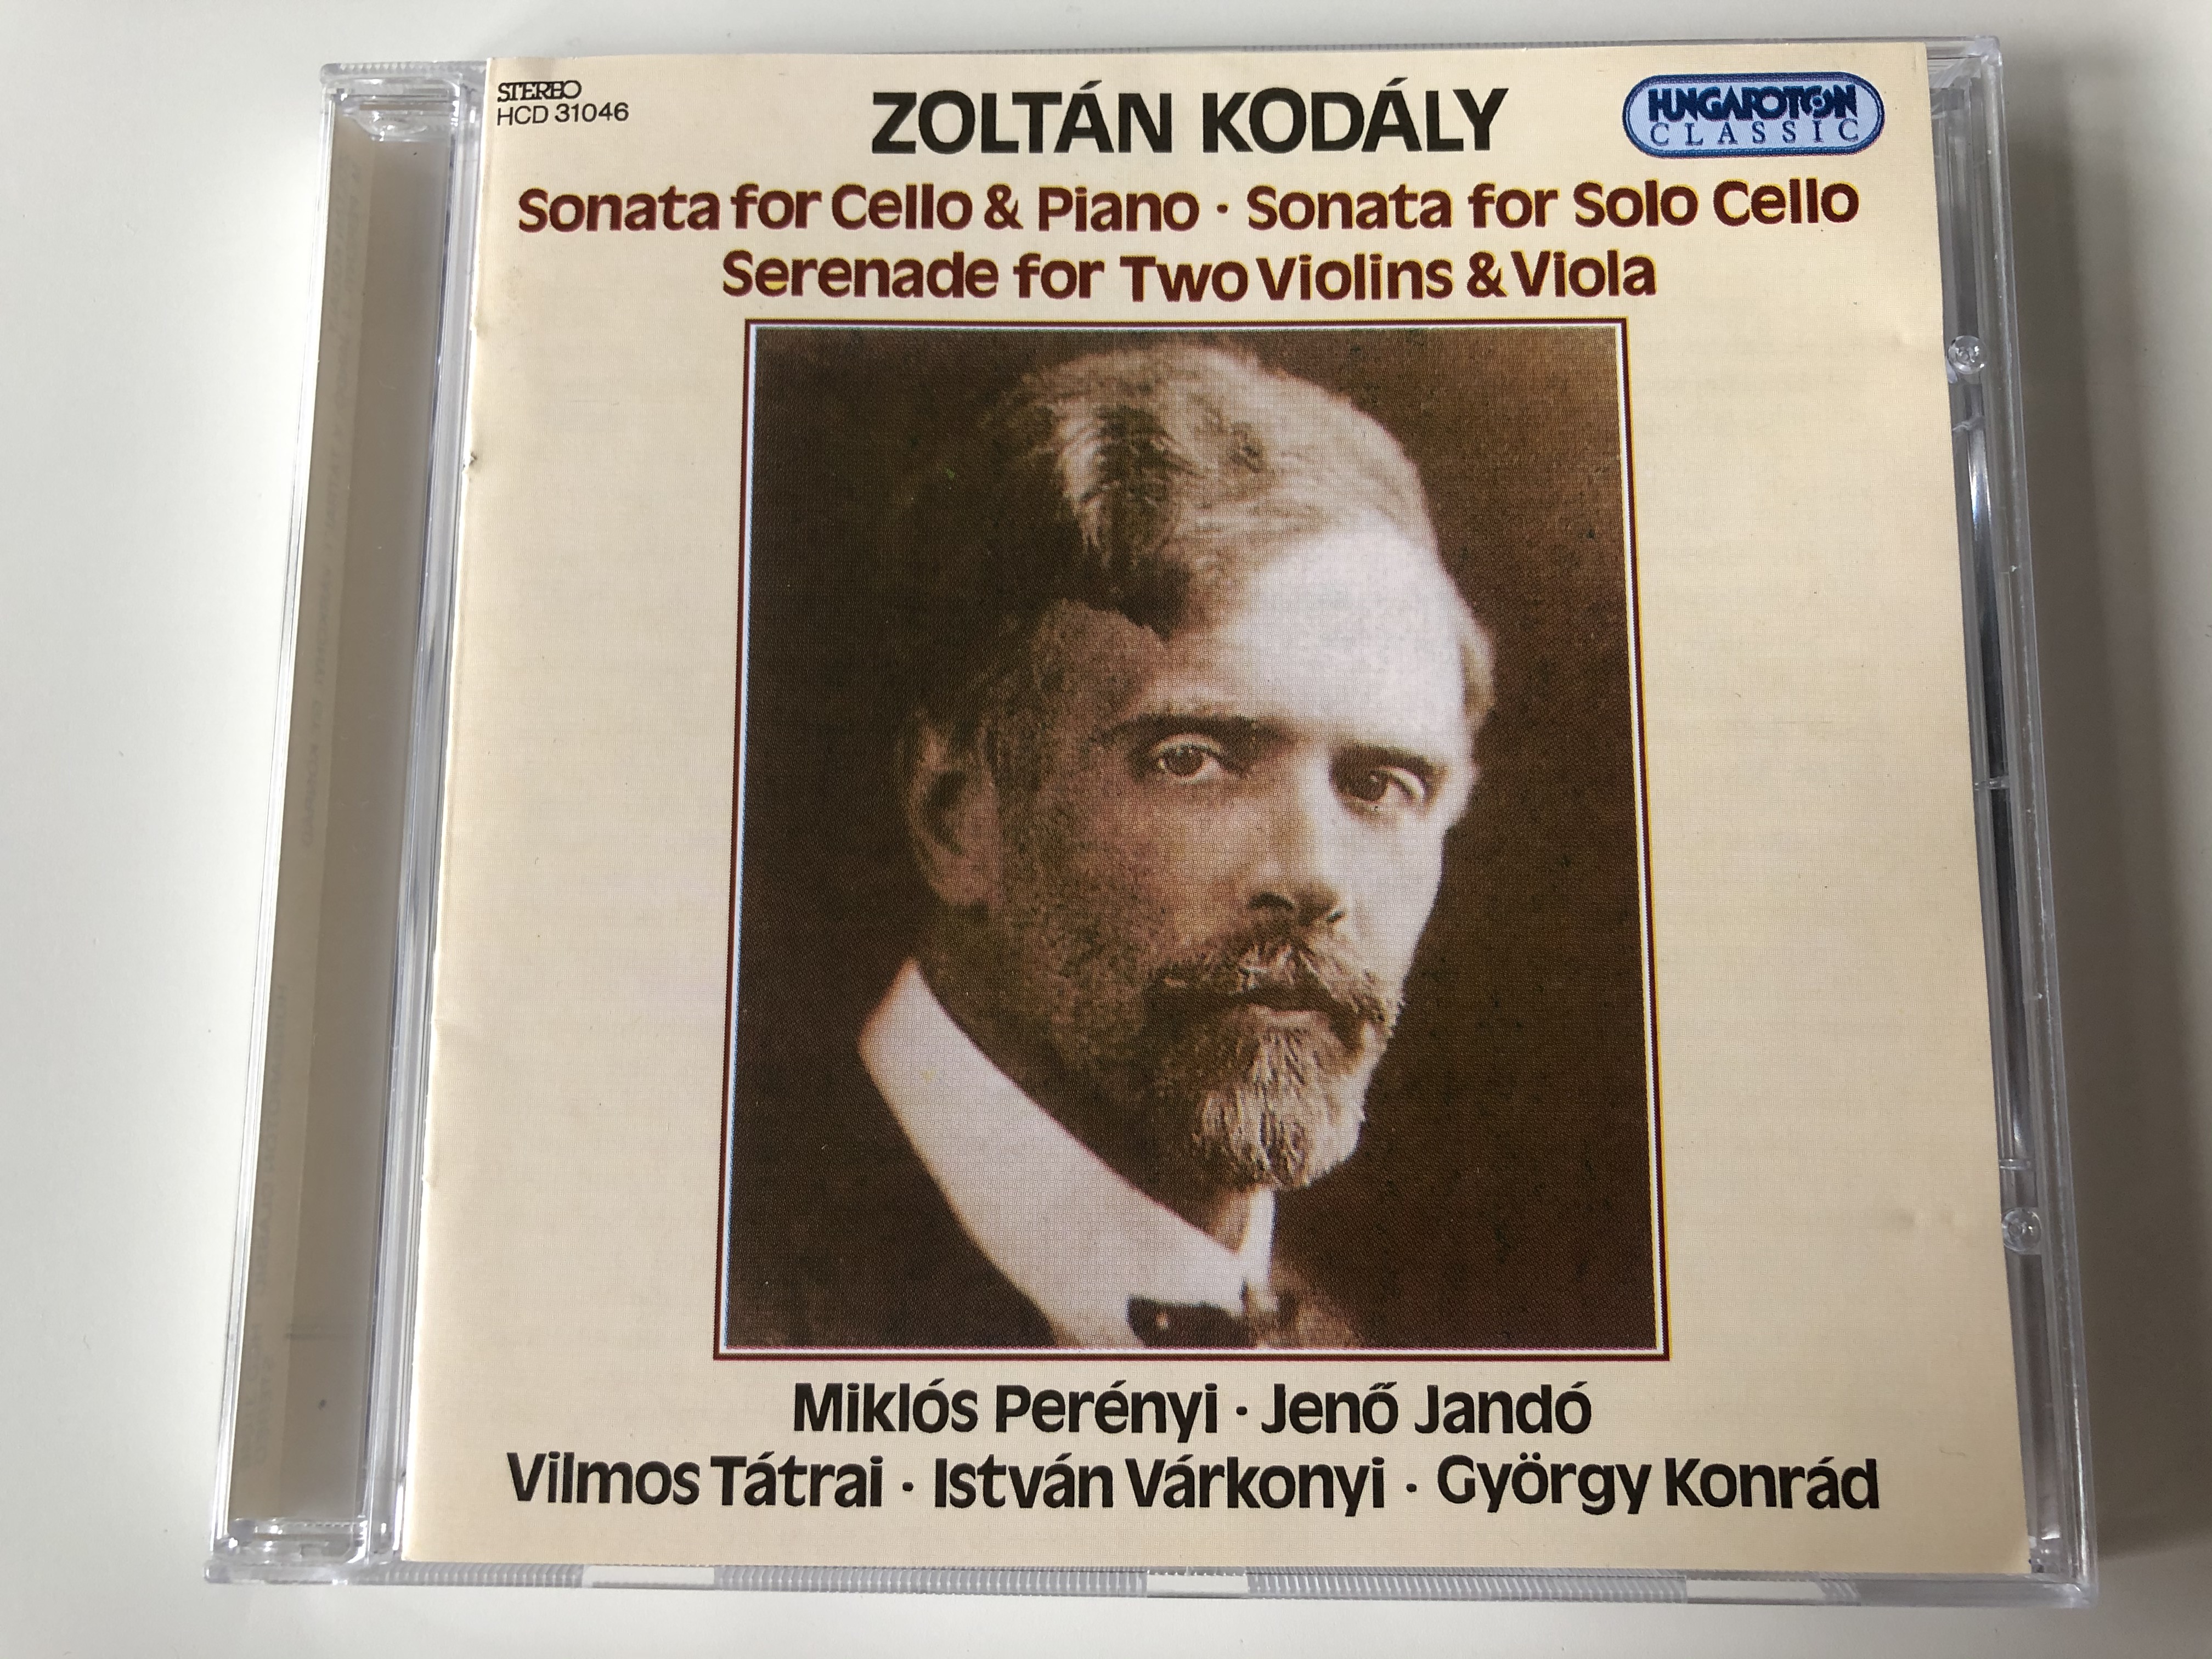 zolt-n-kod-ly-sonata-for-cello-piano-sonata-for-solo-cello-serenade-for-two-violins-viola-mikl-s-per-nyi-jen-jand-vilmos-t-trai-istv-n-v-rkonyi-gy-rgy-konr-d-hungaroton-classic-1-.jpg